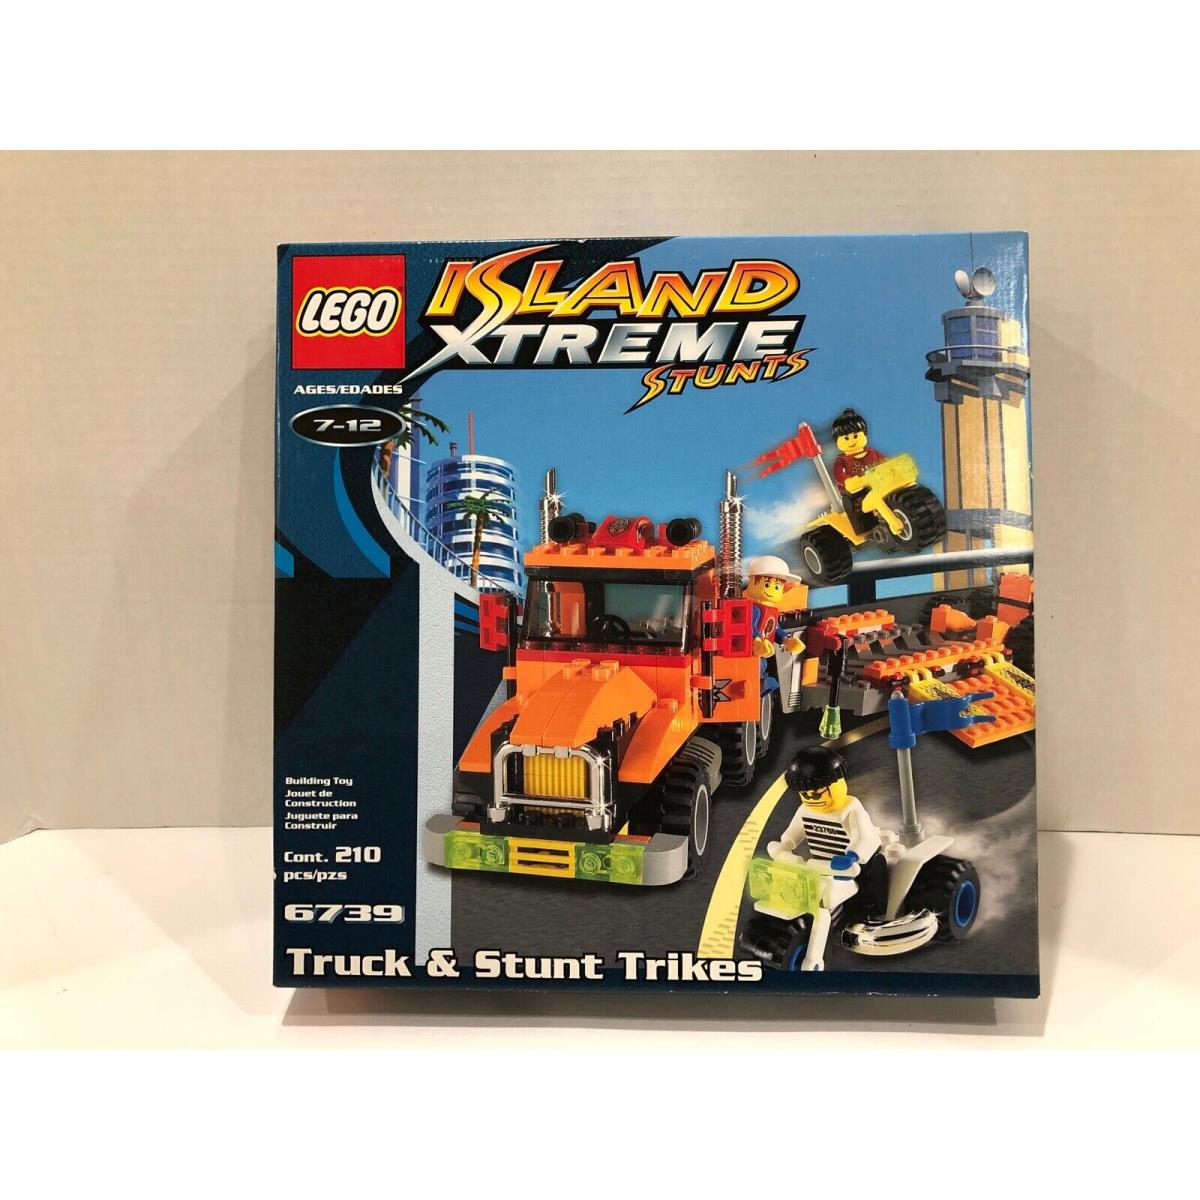 Lego Island Xtreme Stunts Truck Stunt Trikes 6739 - Retired